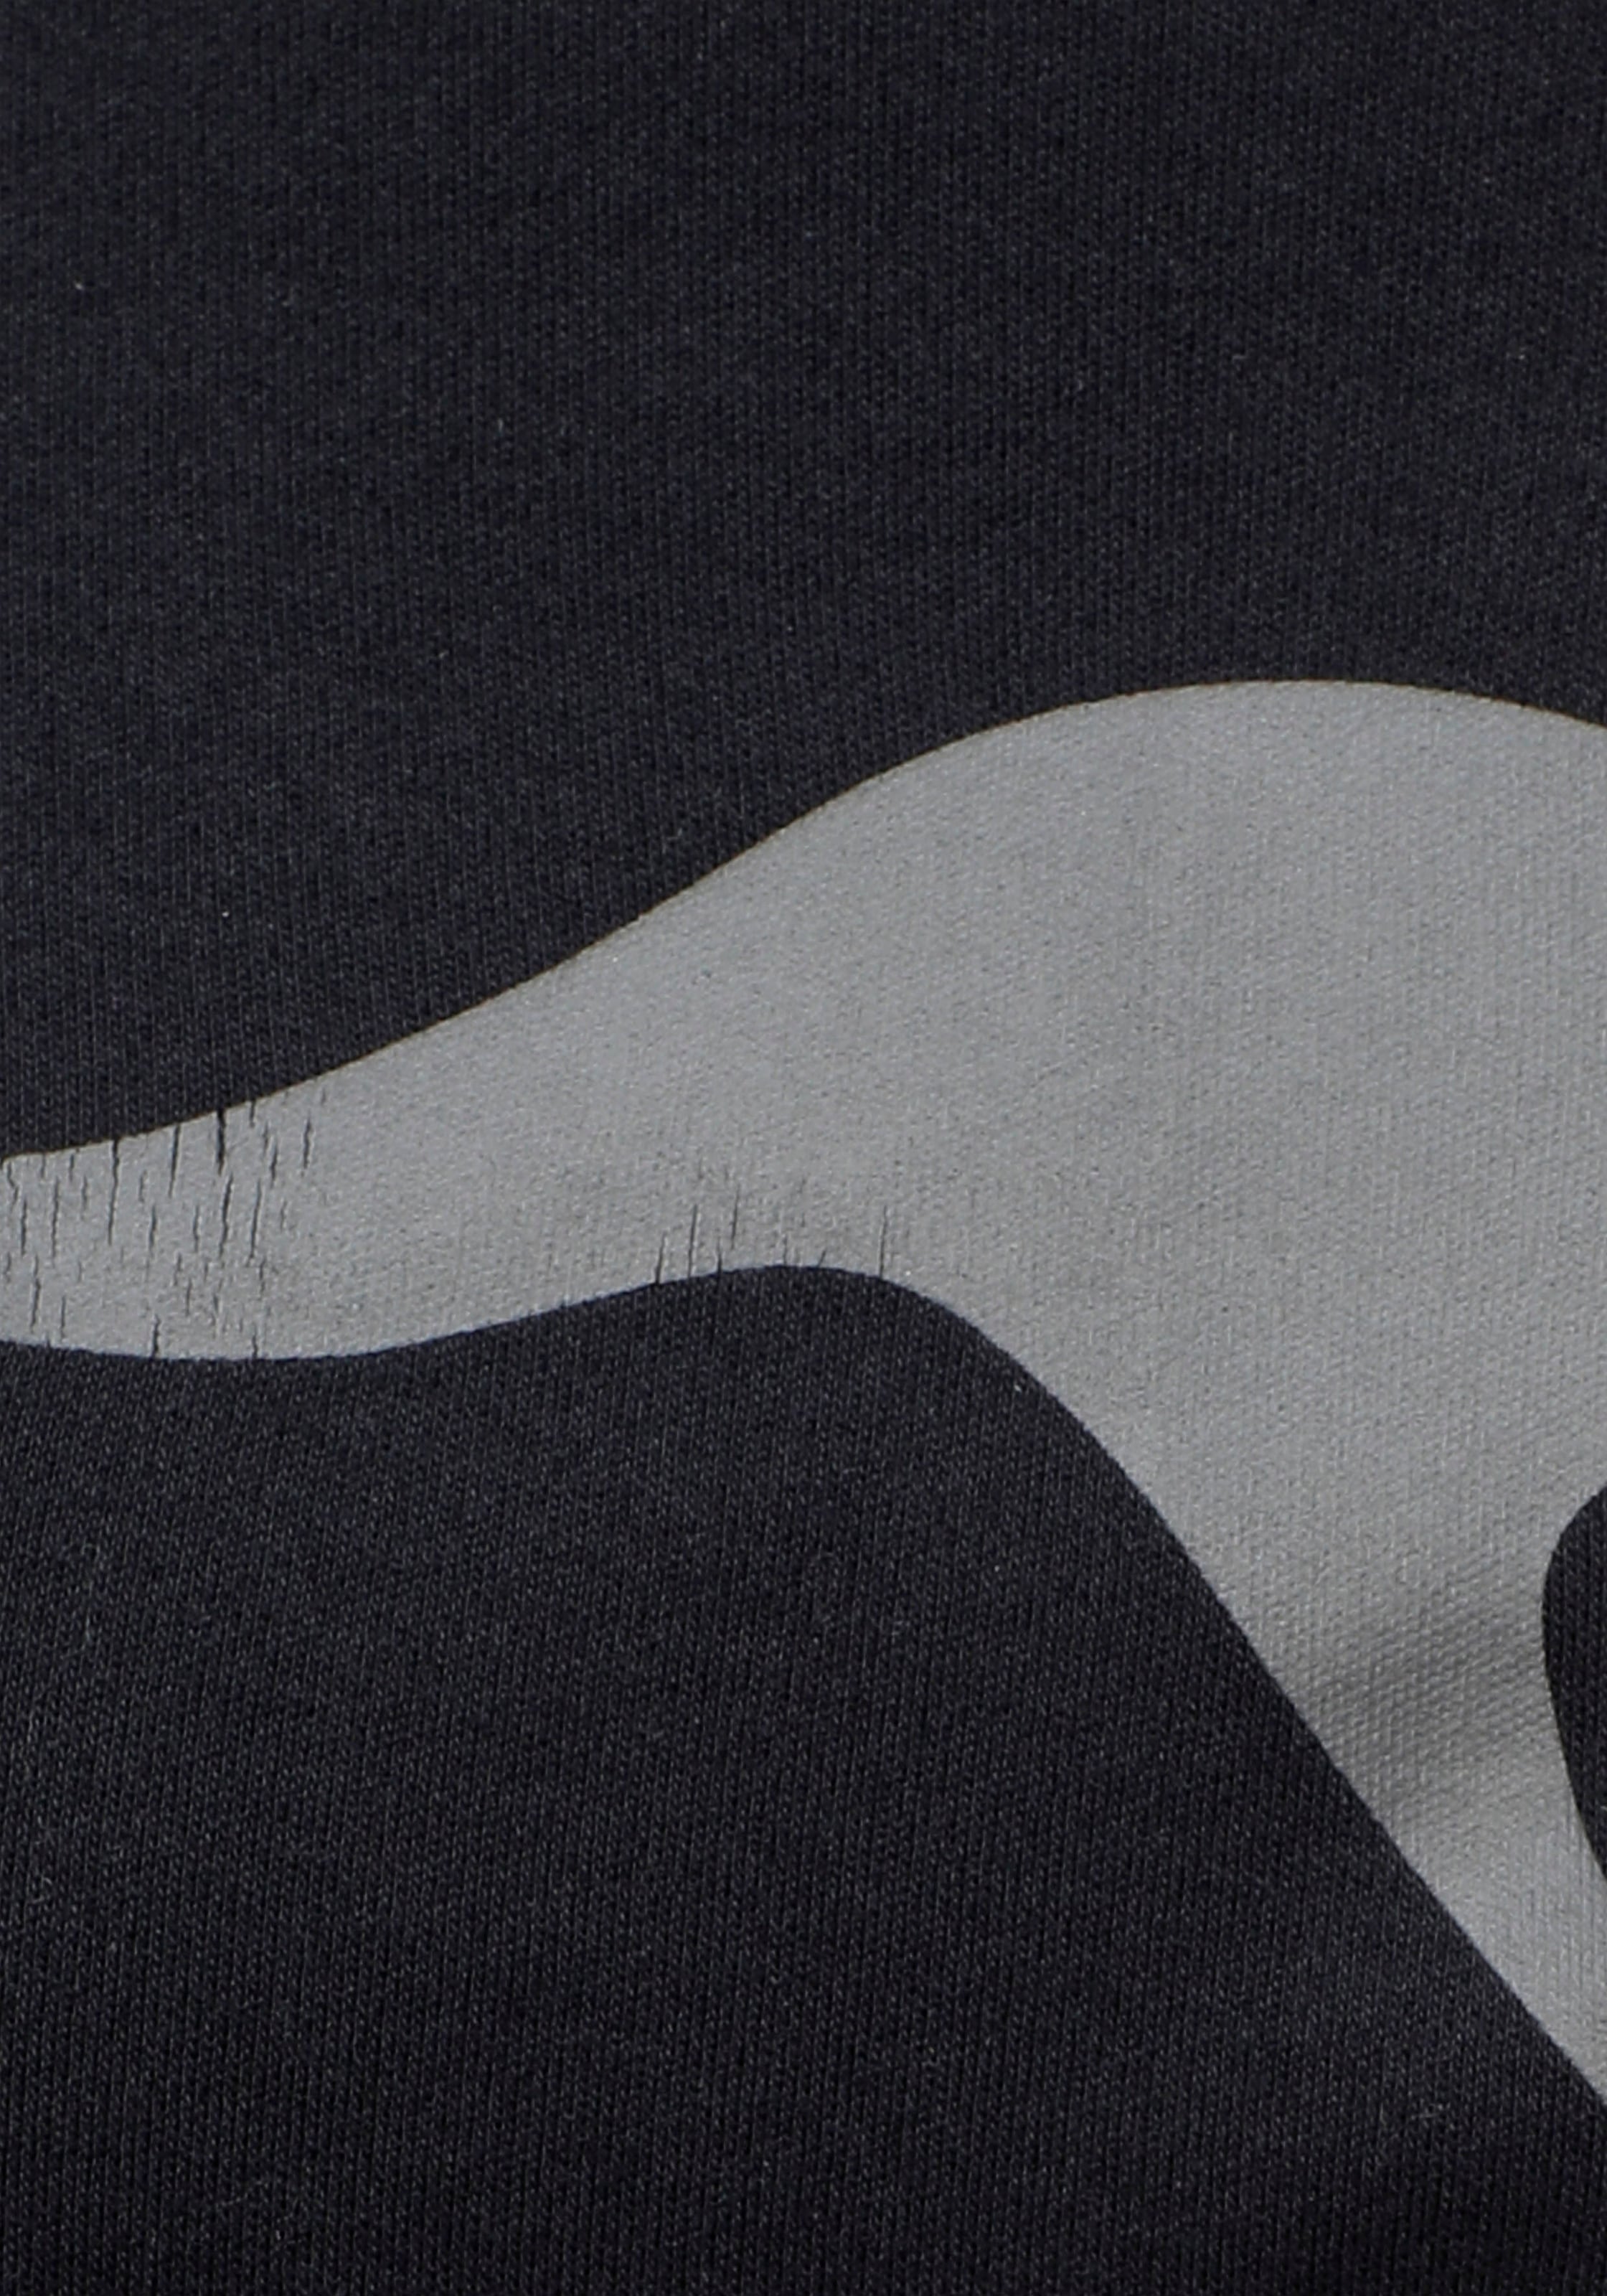 KangaROOS Sweater, mit großem Label-Print vorne